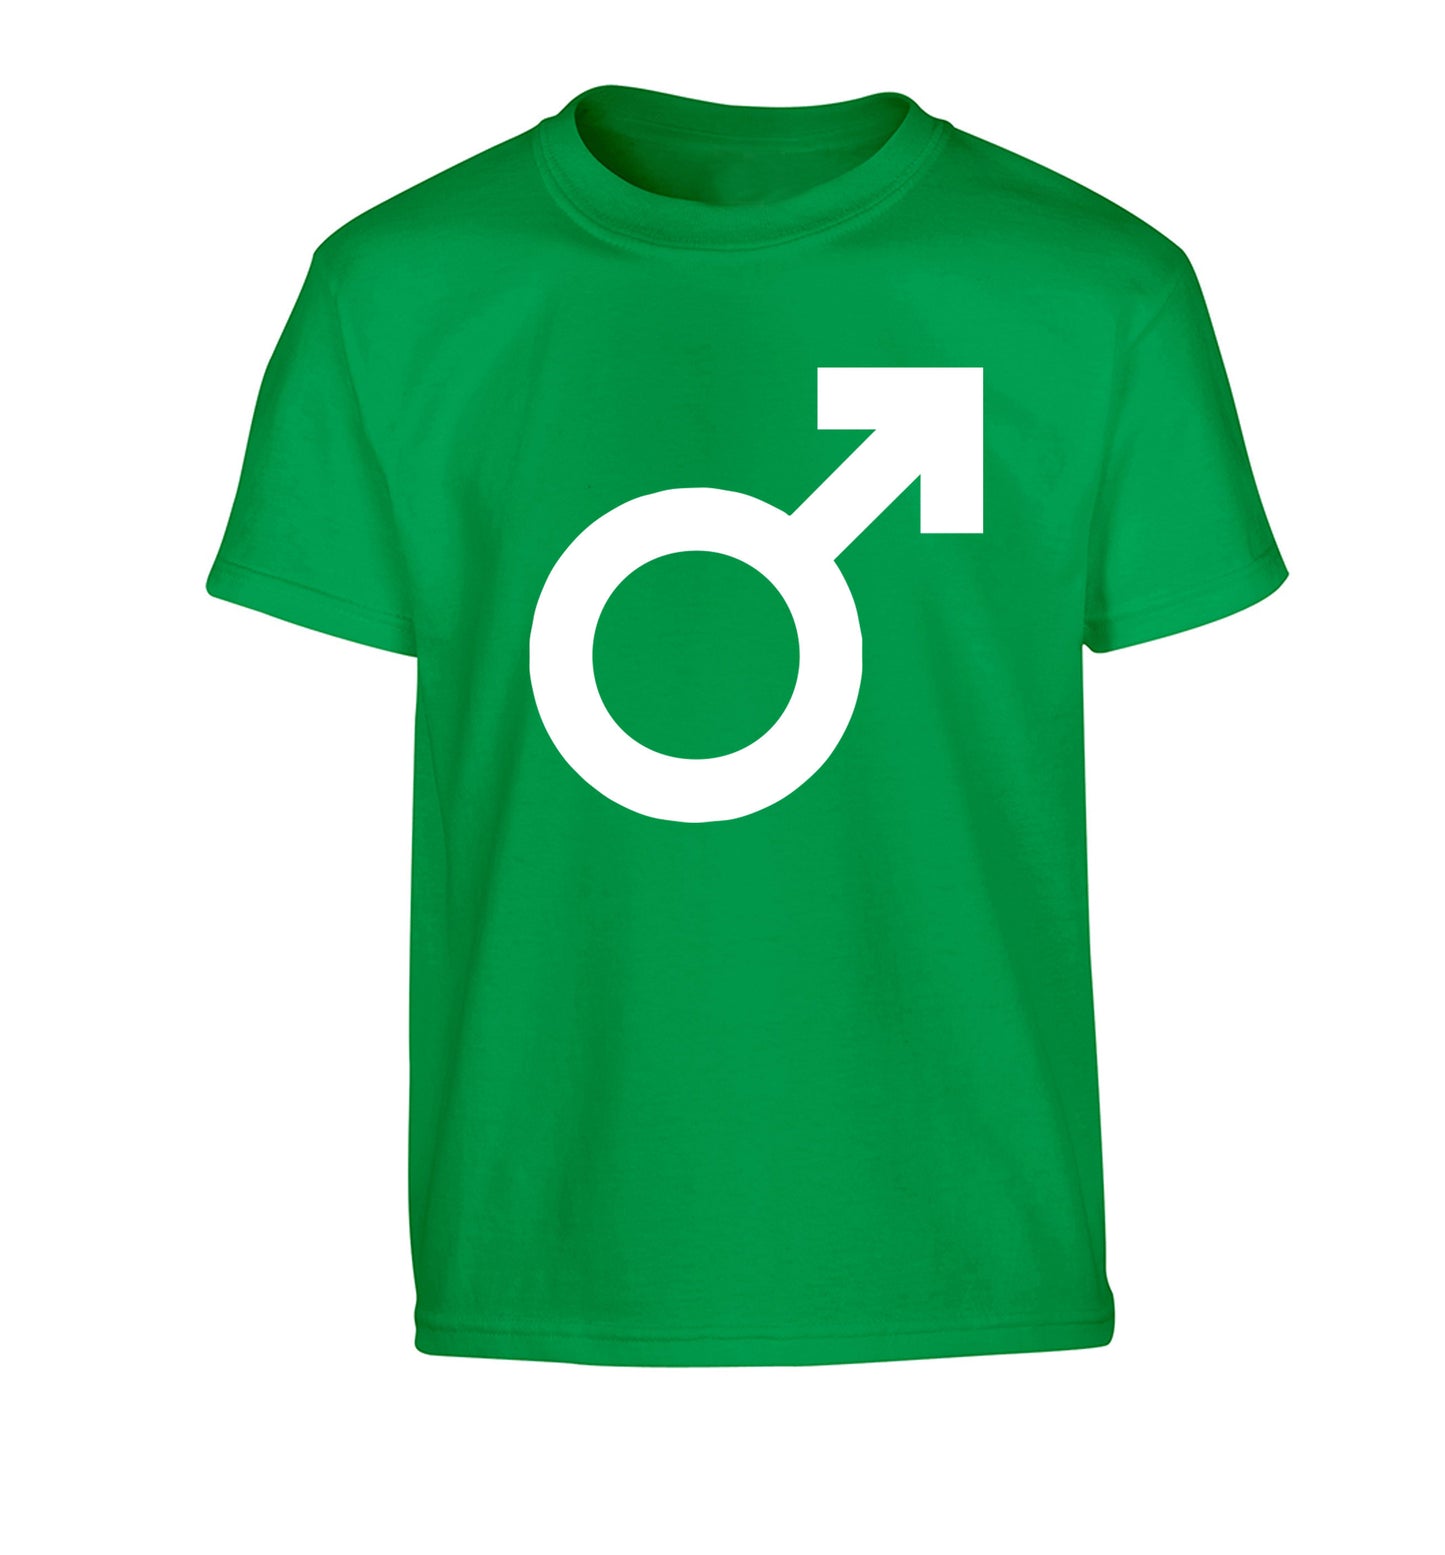 Male symbol large Children's green Tshirt 12-14 Years